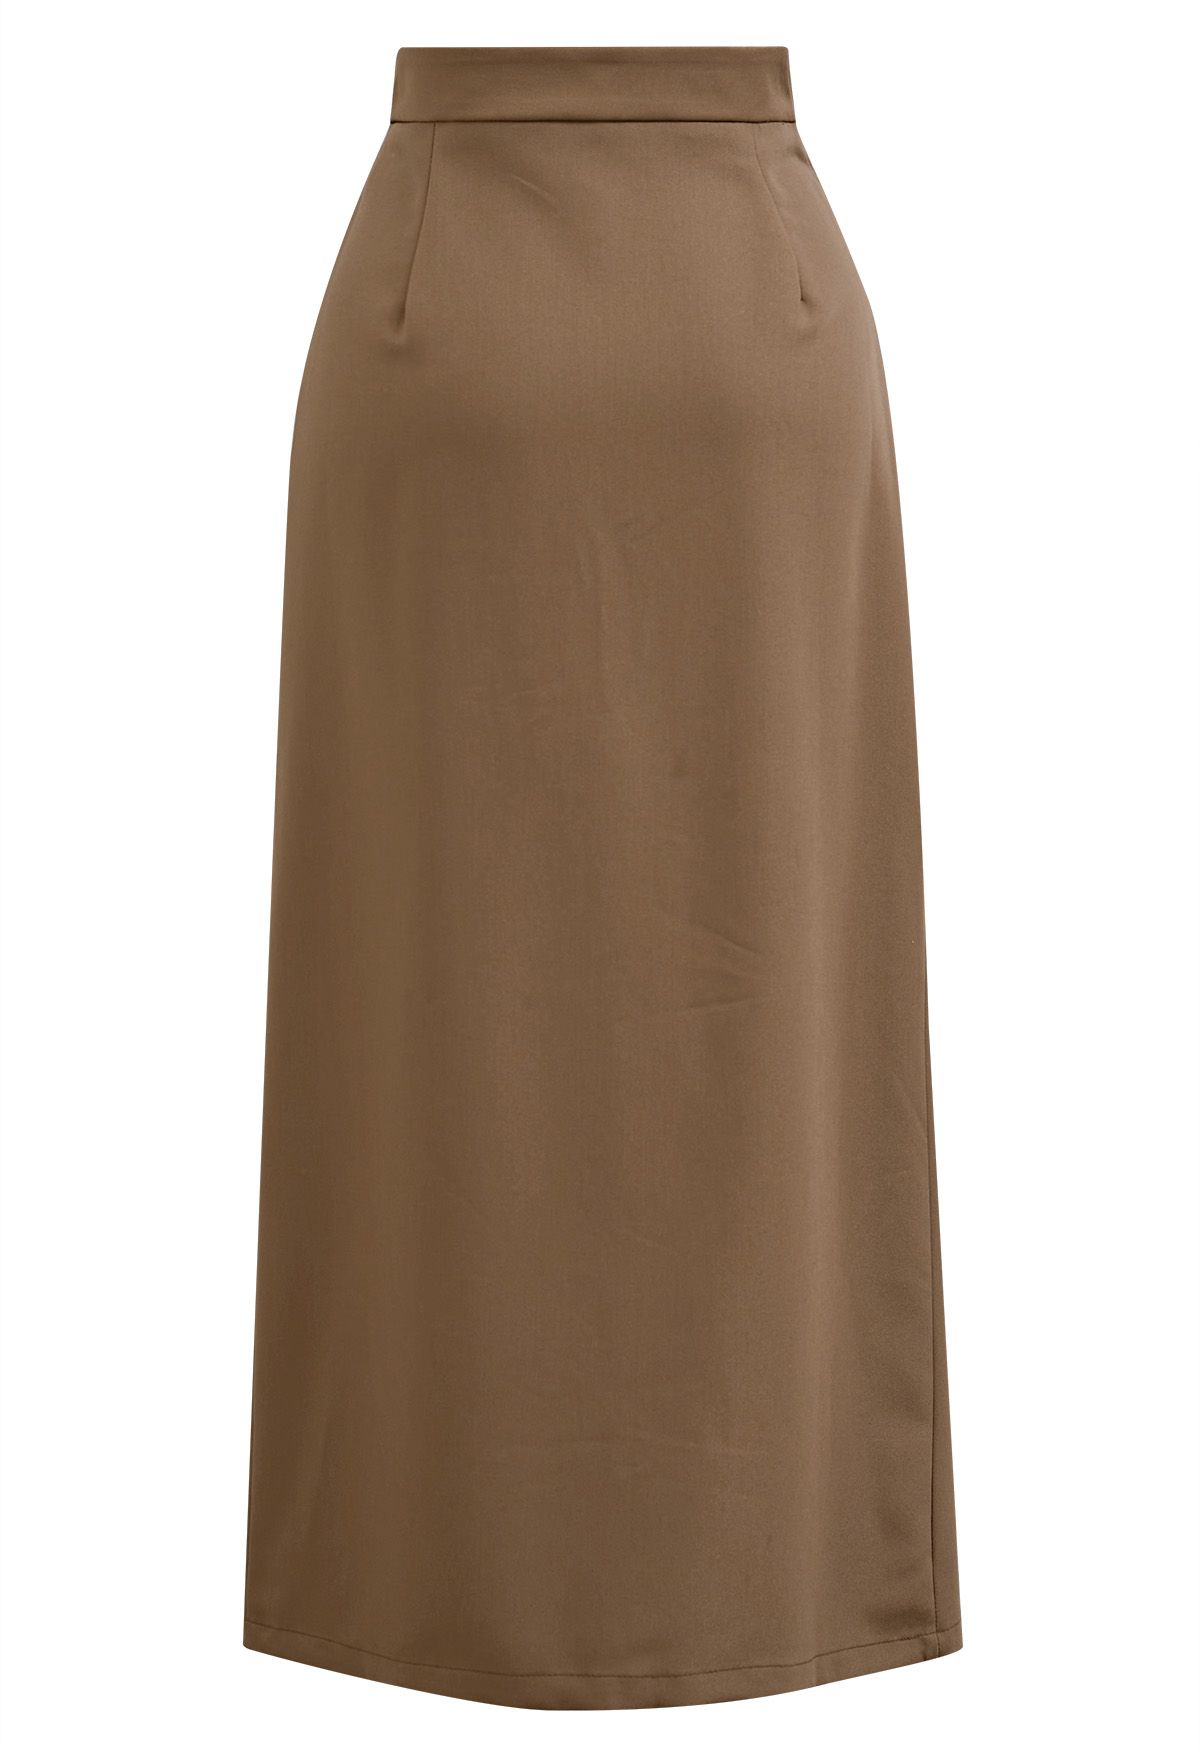 Welt Pocket Front Slit Skirt in Caramel